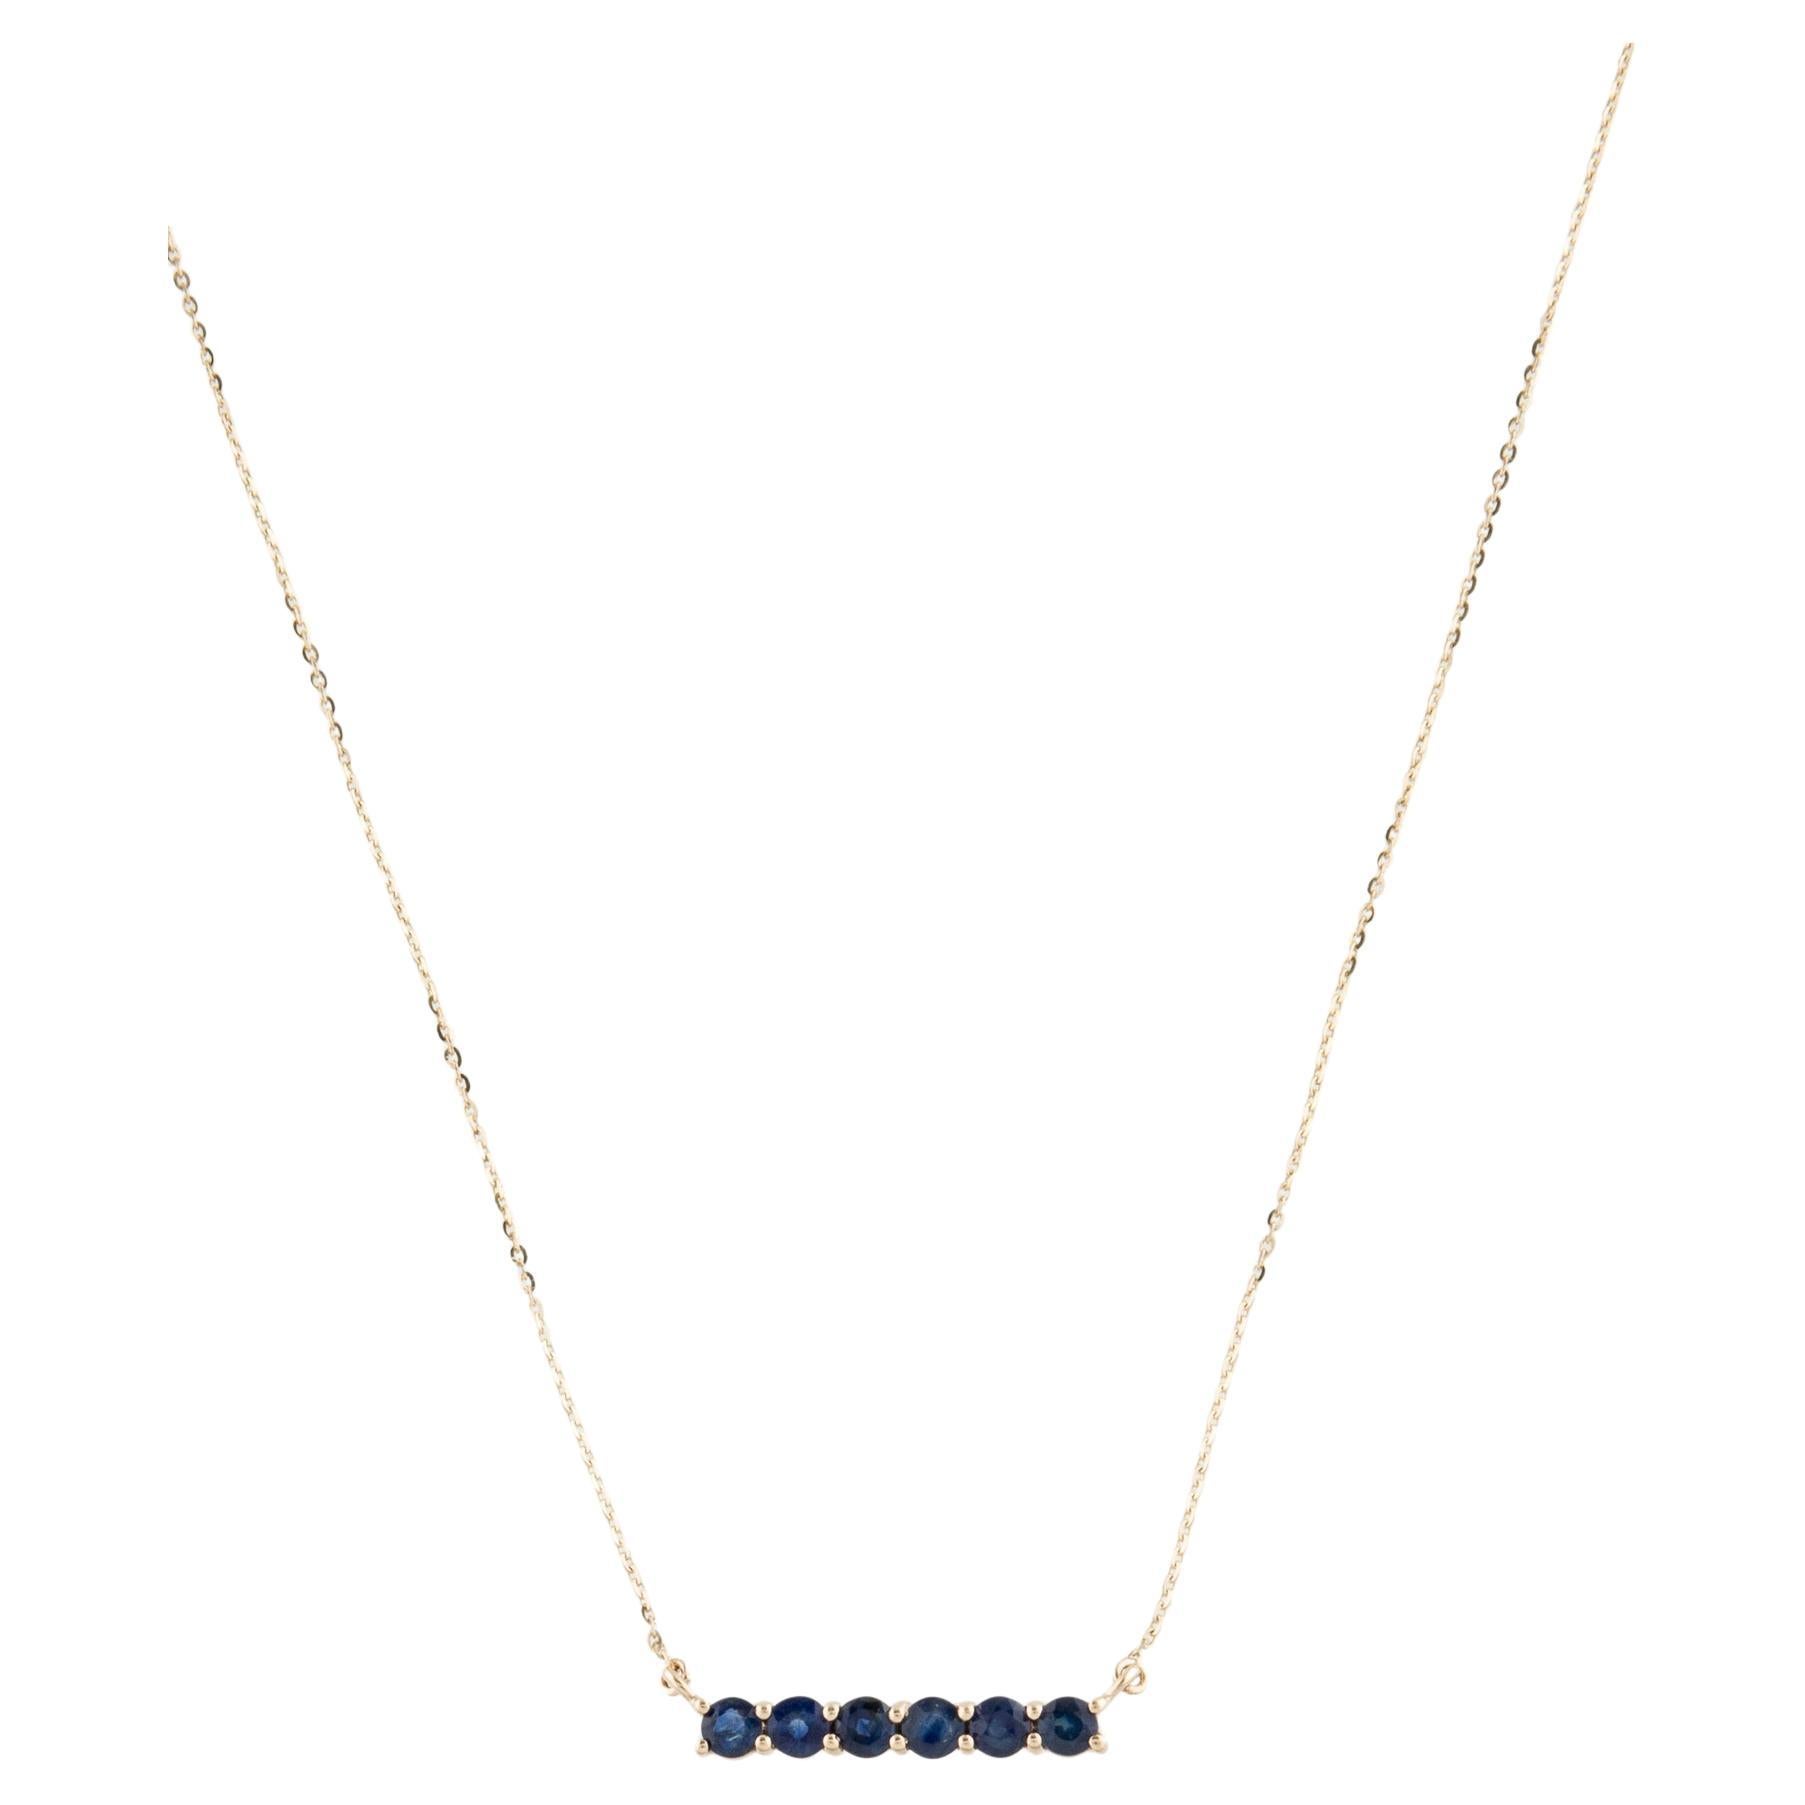 Exquisite 14K Sapphire Pendant Necklace  Elegant Gemstone Accent Piece